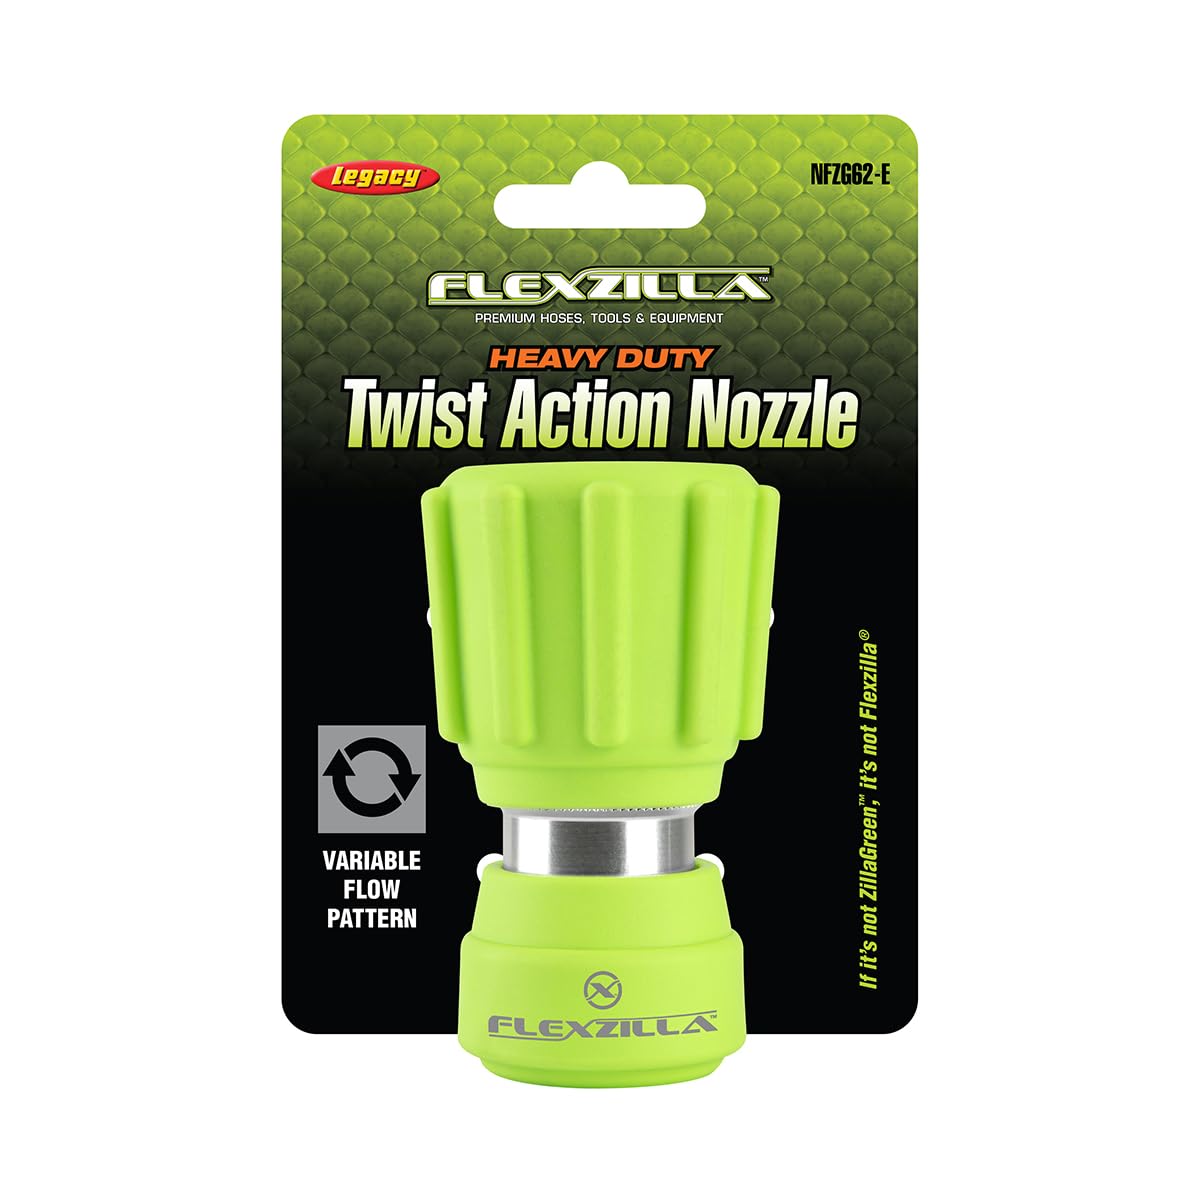 Flexzilla NFZG62 Twist Action Nozzle, Green